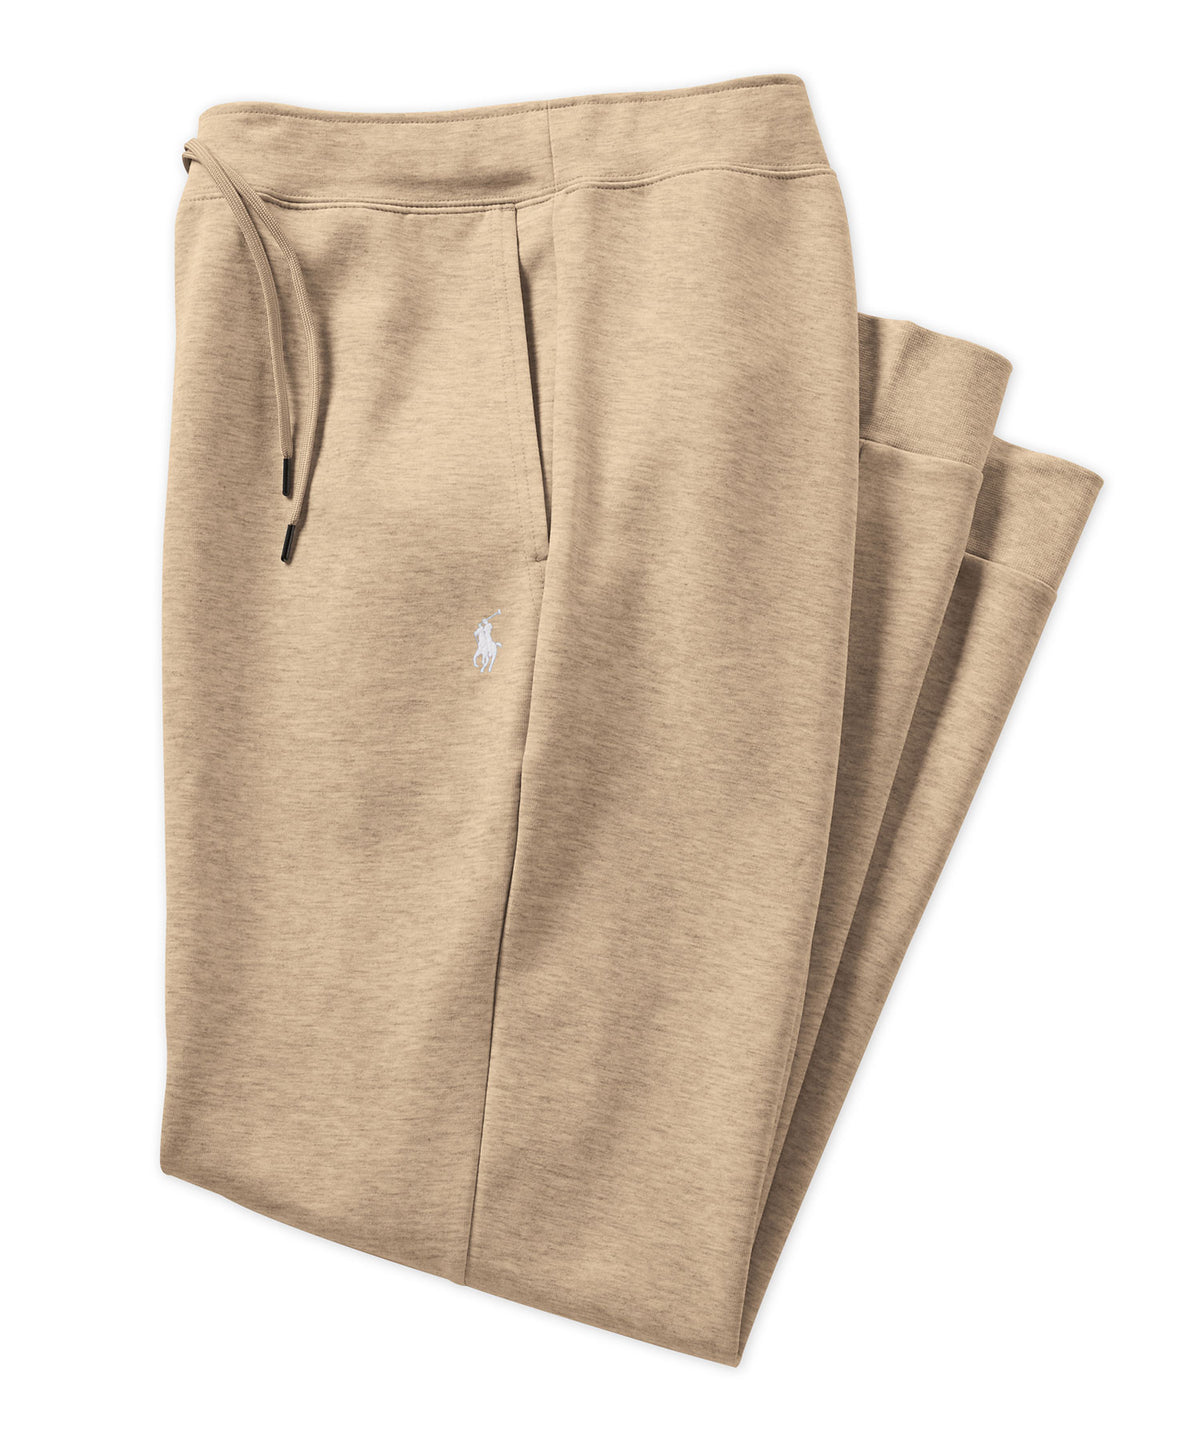 Polo Ralph Lauren Double Knit Tech Pant, Men's Big & Tall